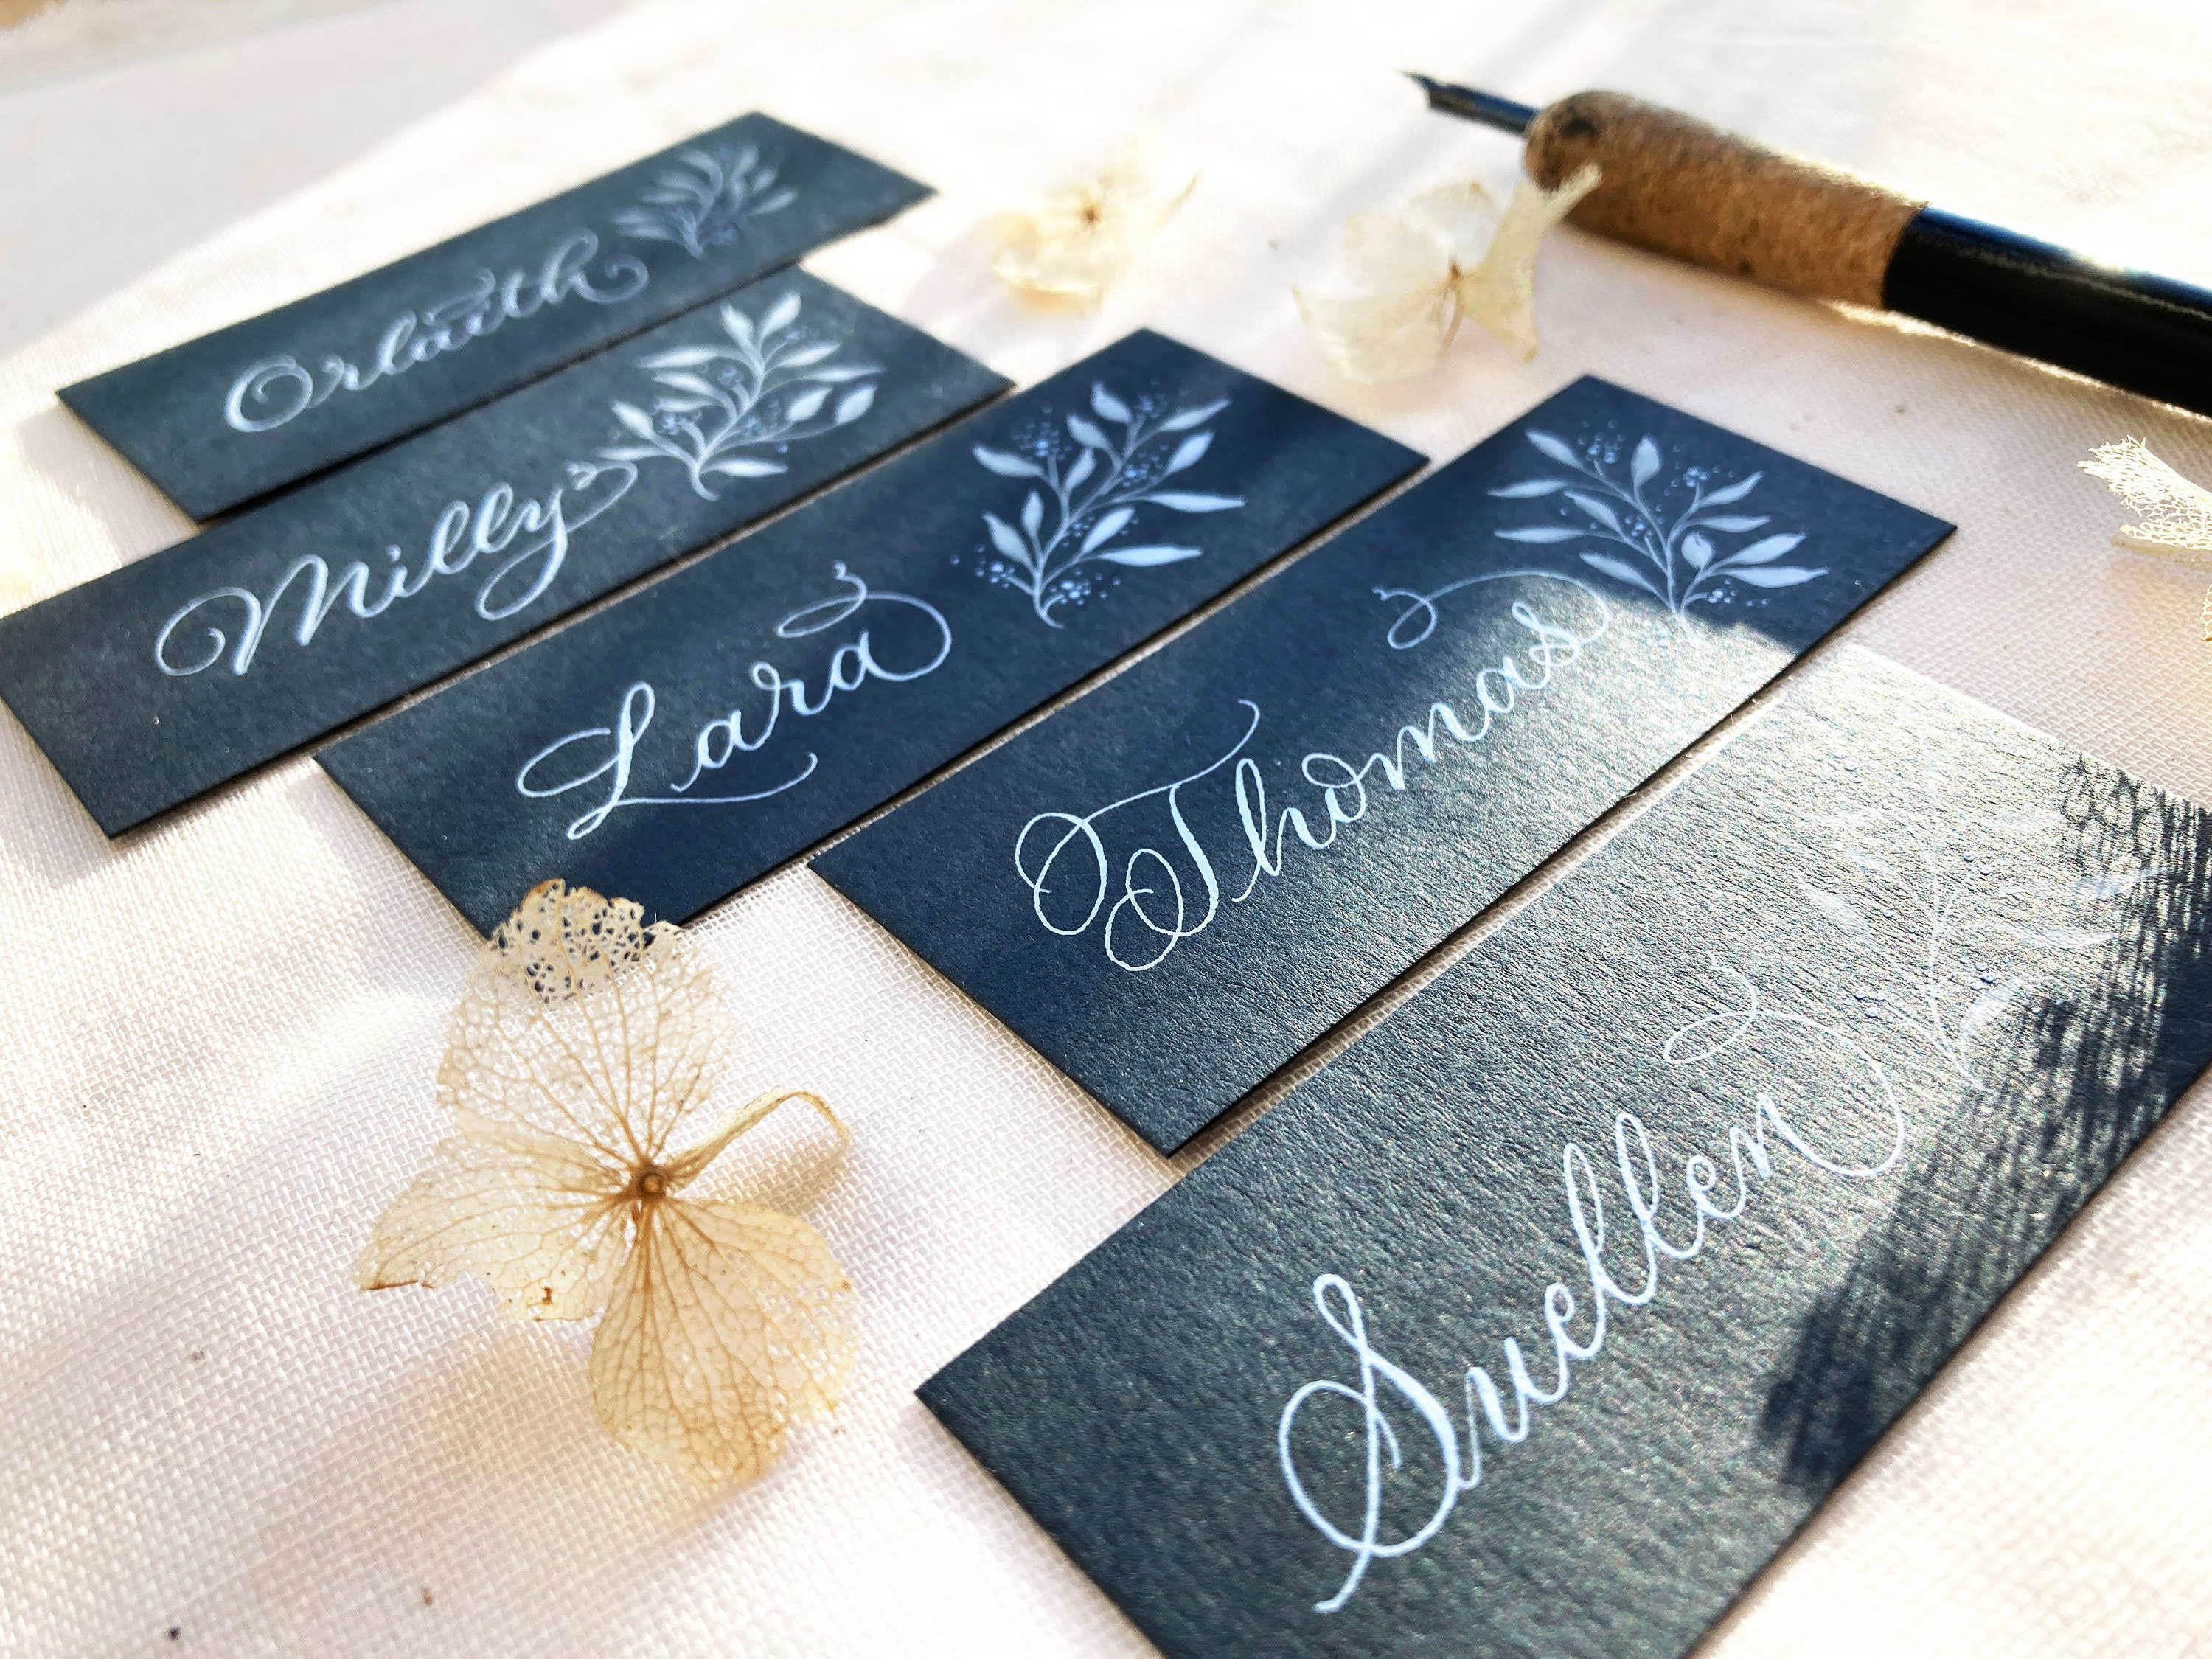 Slate coloured wedding name settings by a calligrapher in the UK